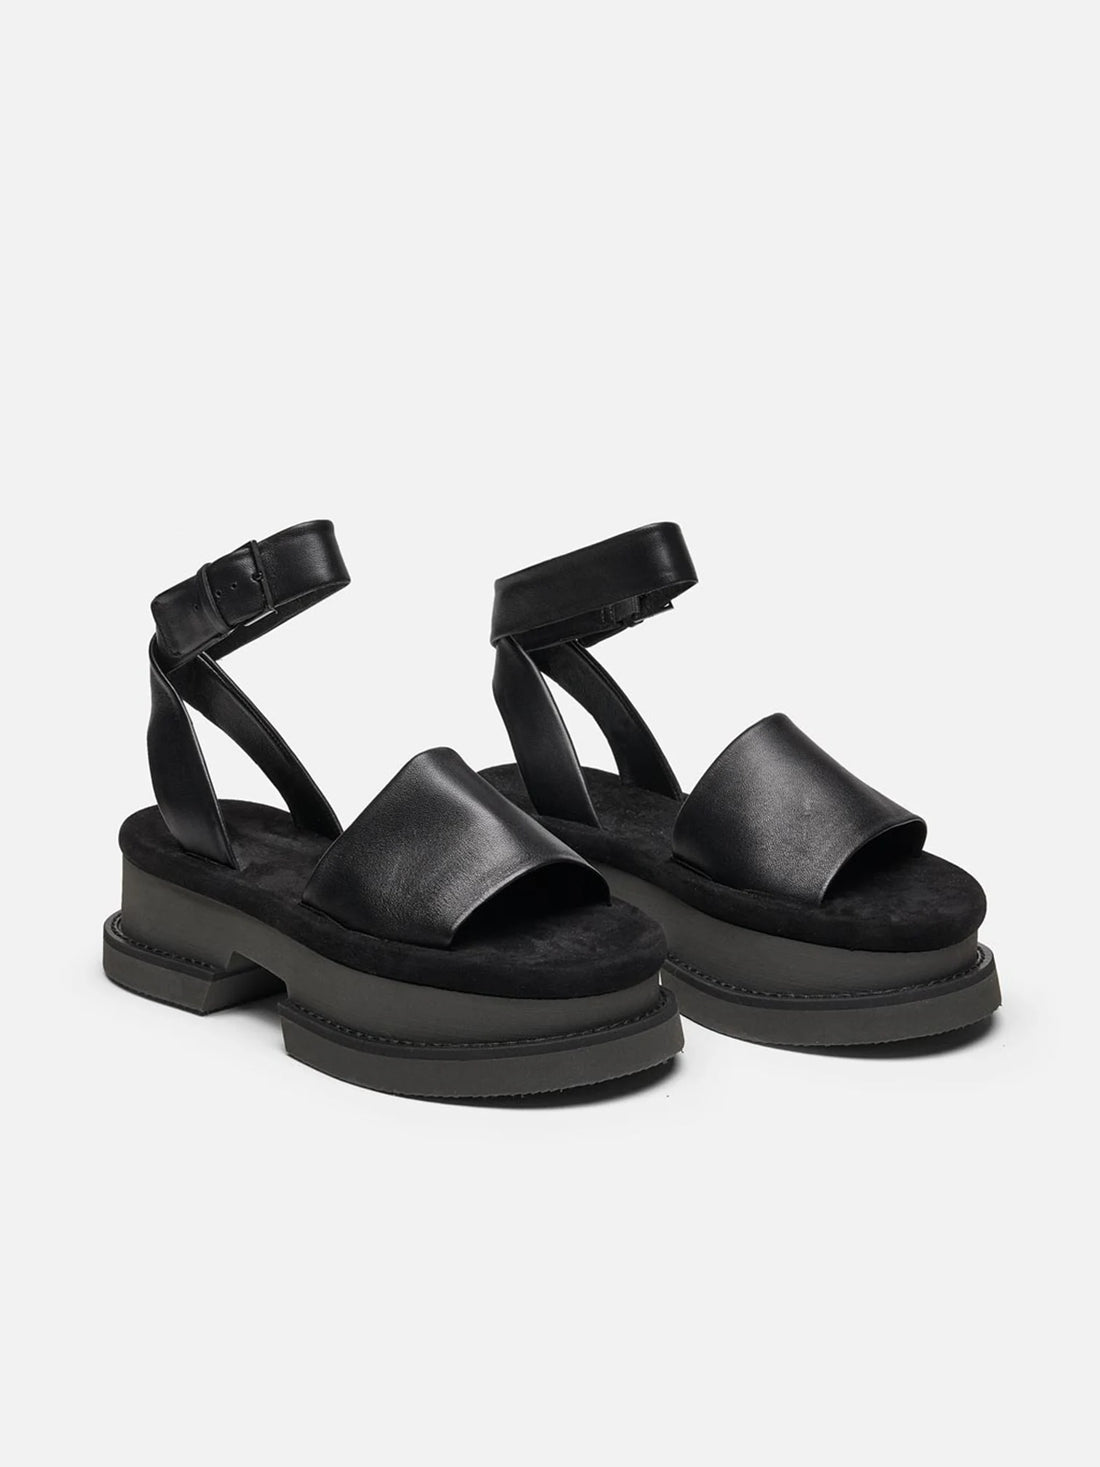 FILATE sandals, lambskin black || OUTLET